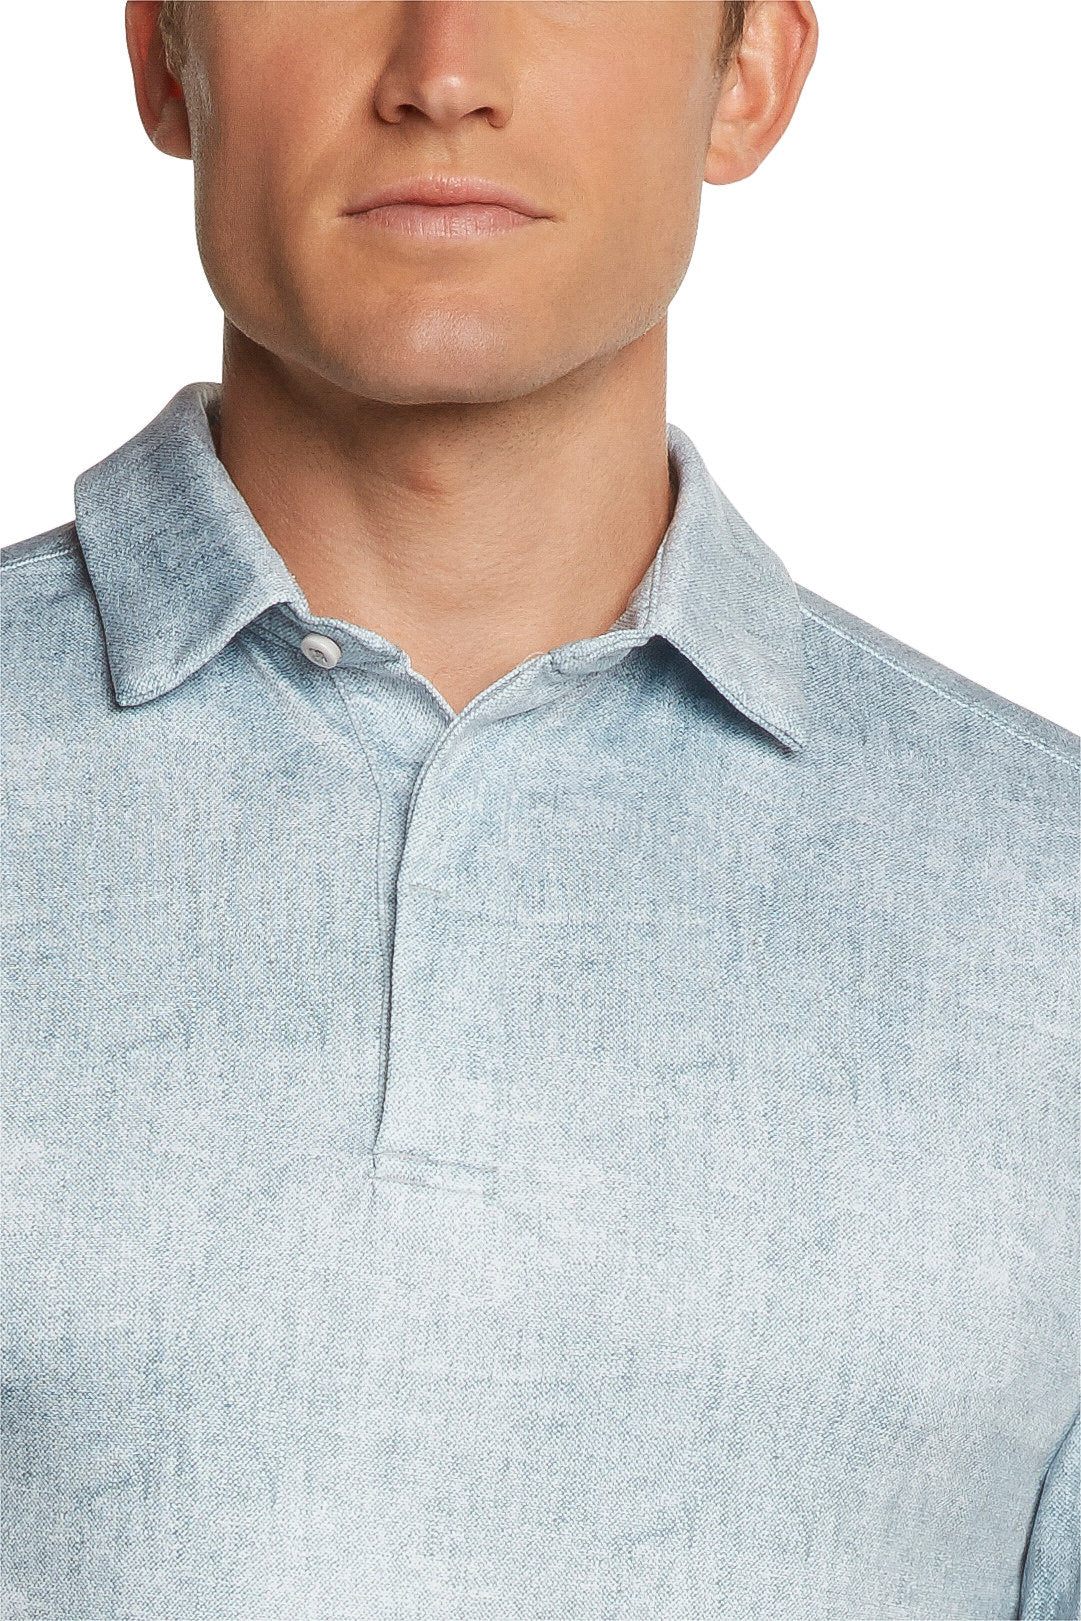 Men's Dry-Fit Long Sleeve Golf Polo Shirt